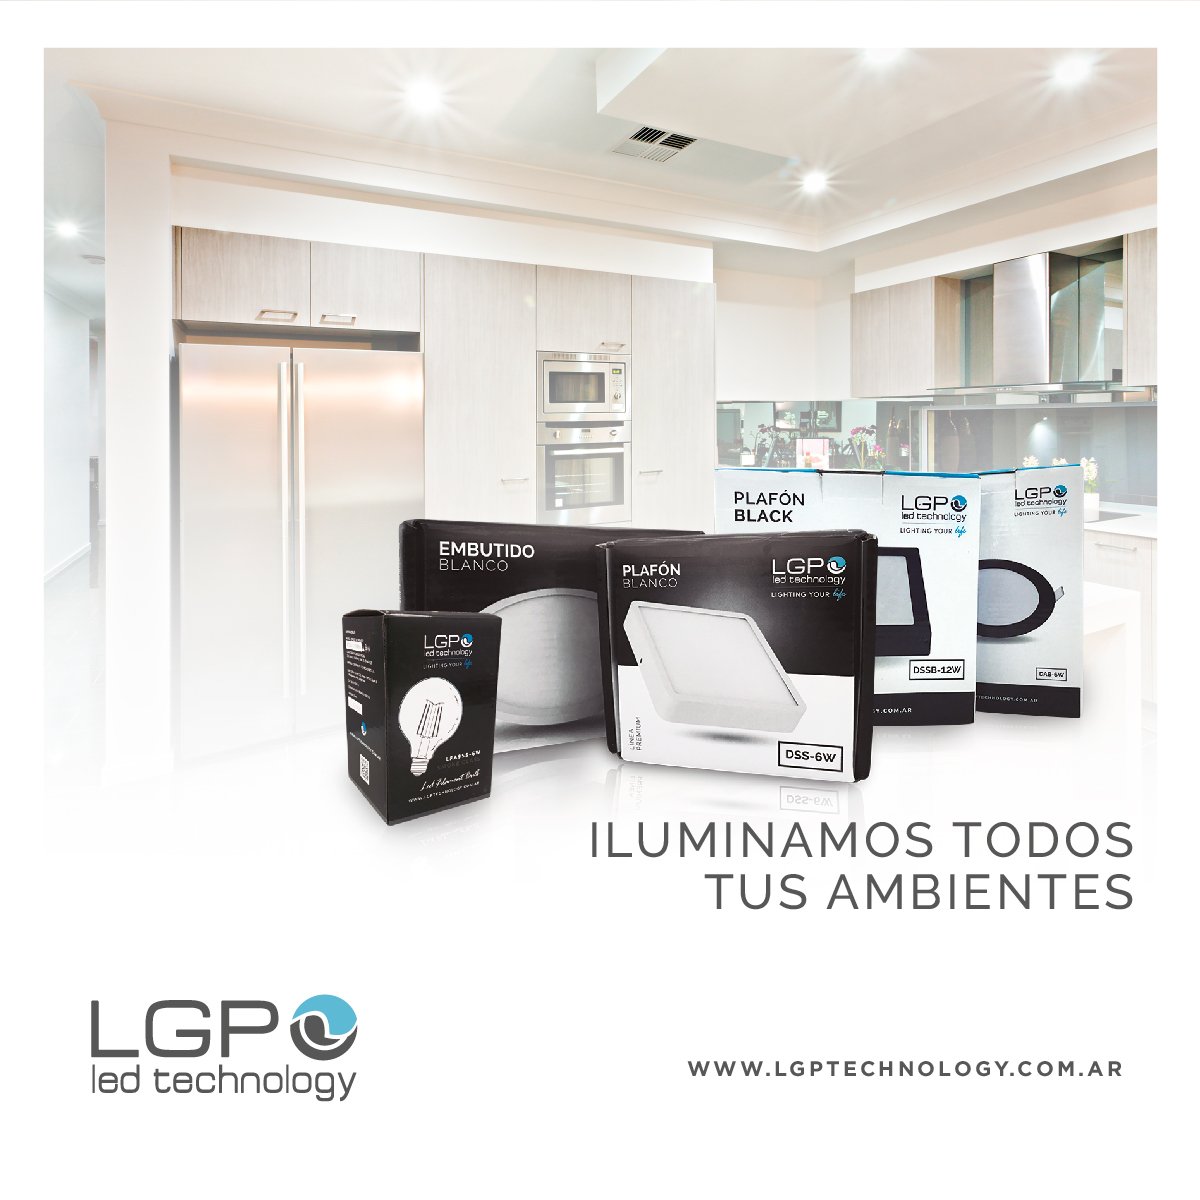 LGP. Led Technology, una empresa destacada por sus productos LED